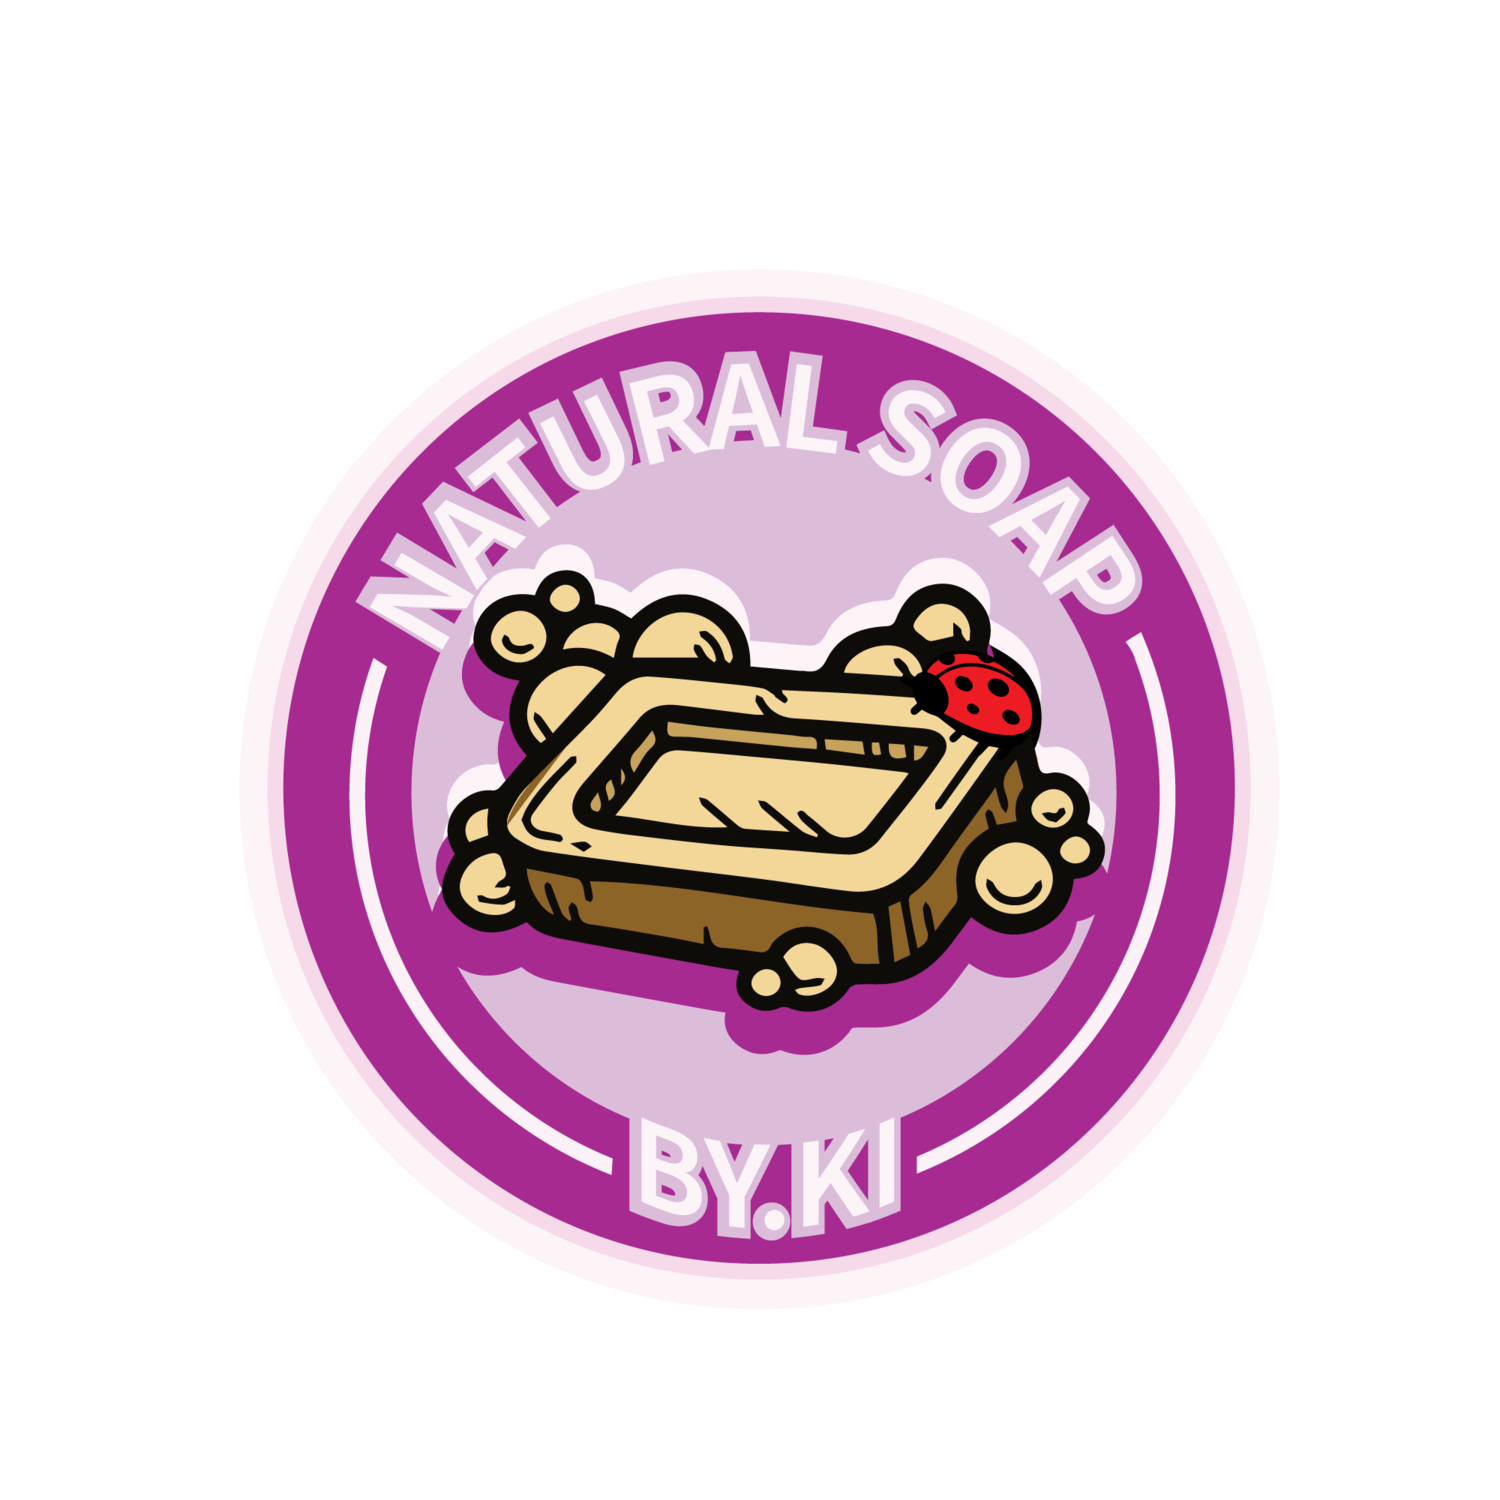 Natural Soap By Ki